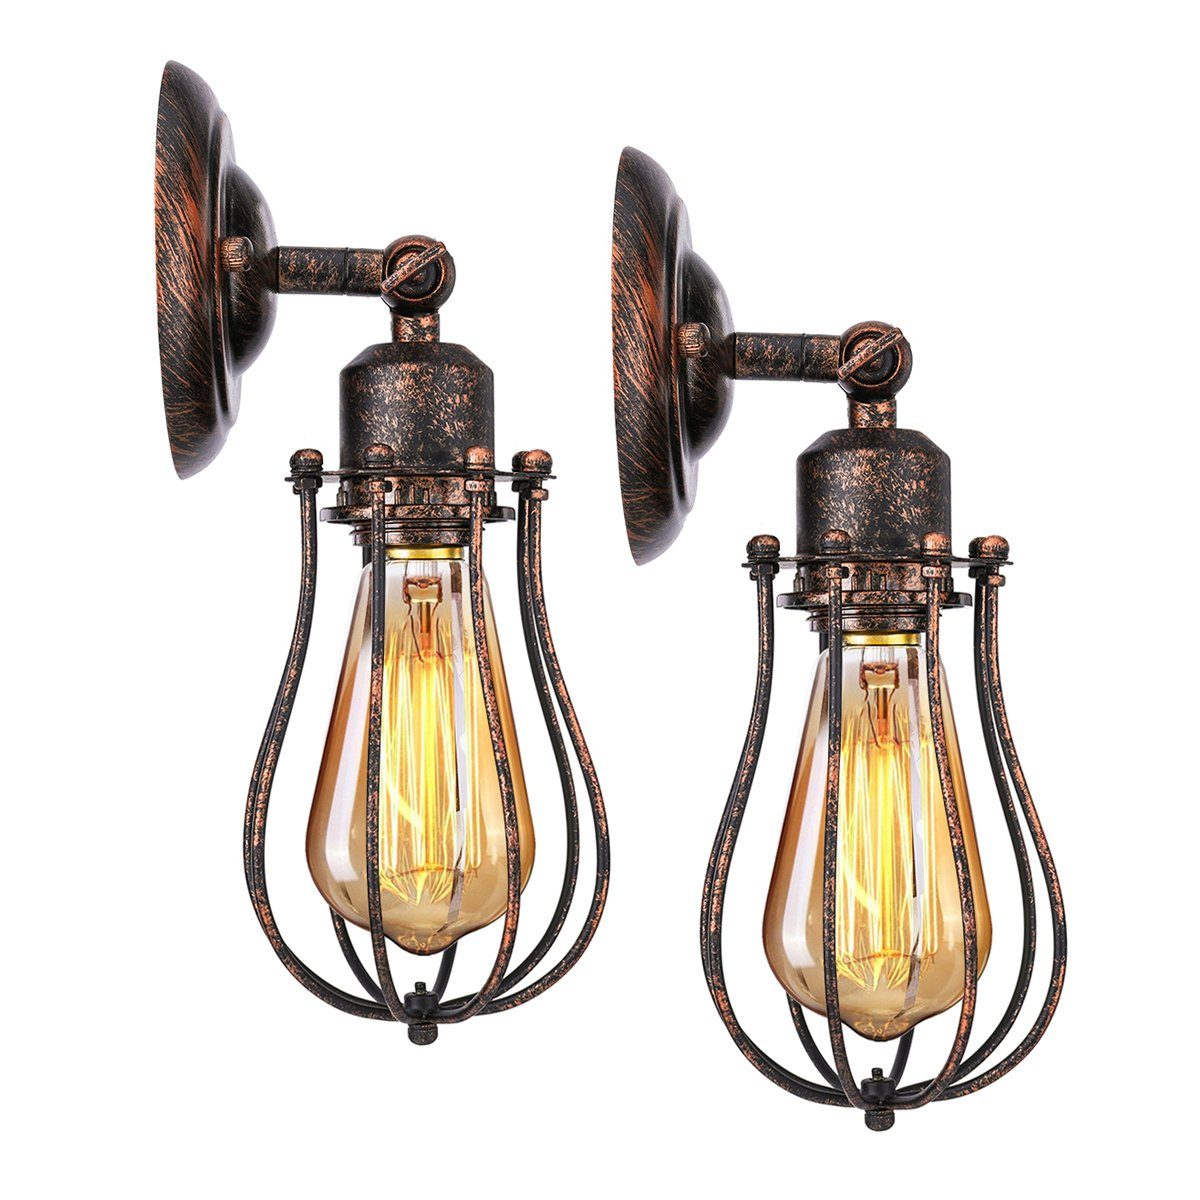 dekorativ, KingSo Vintage Wandleuchte integriert, besonders Lampen, ELEGIANT fest atmospärisch, beruhigendes LED industrielle ambiente